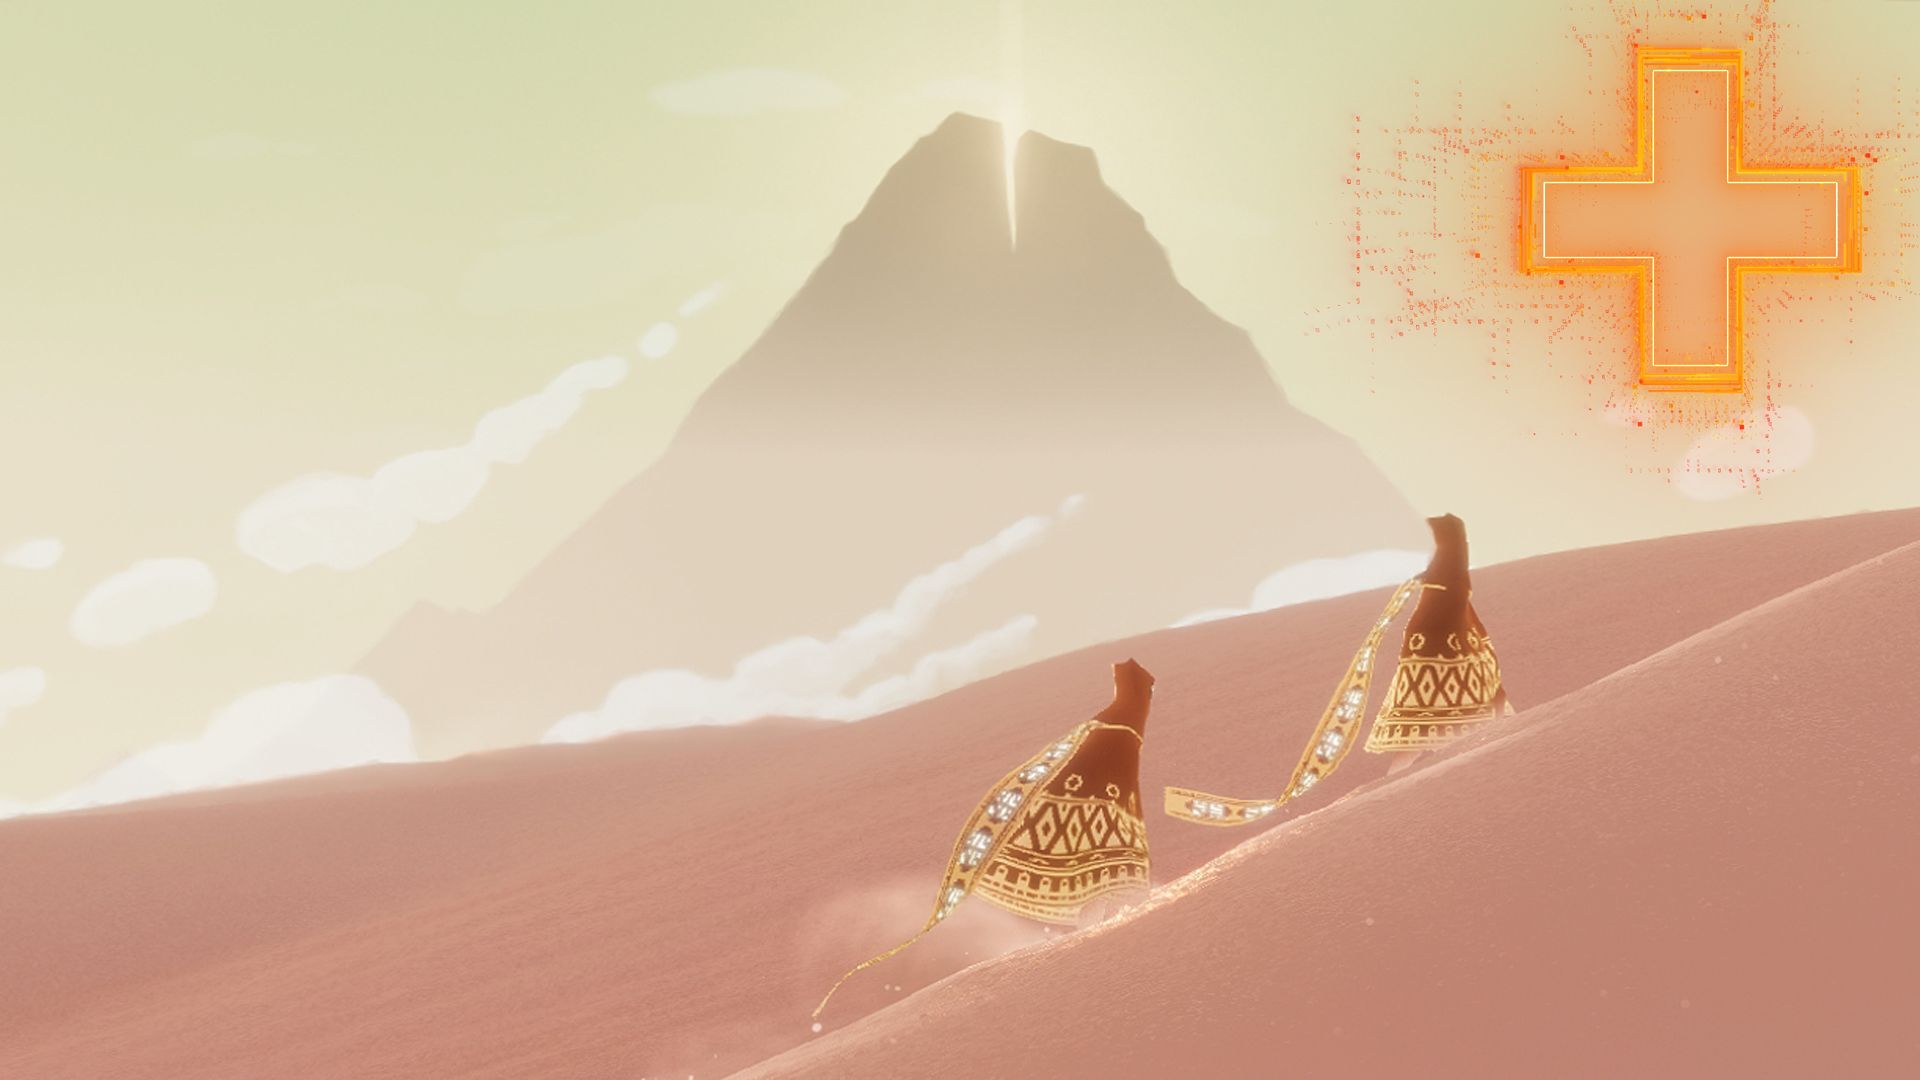 Journey игра отзывы. Journey игра. Journey (игра, 2012). Journey пустыня ps4 Скриншоты thatgamecompany. Джорни путешествие игра.